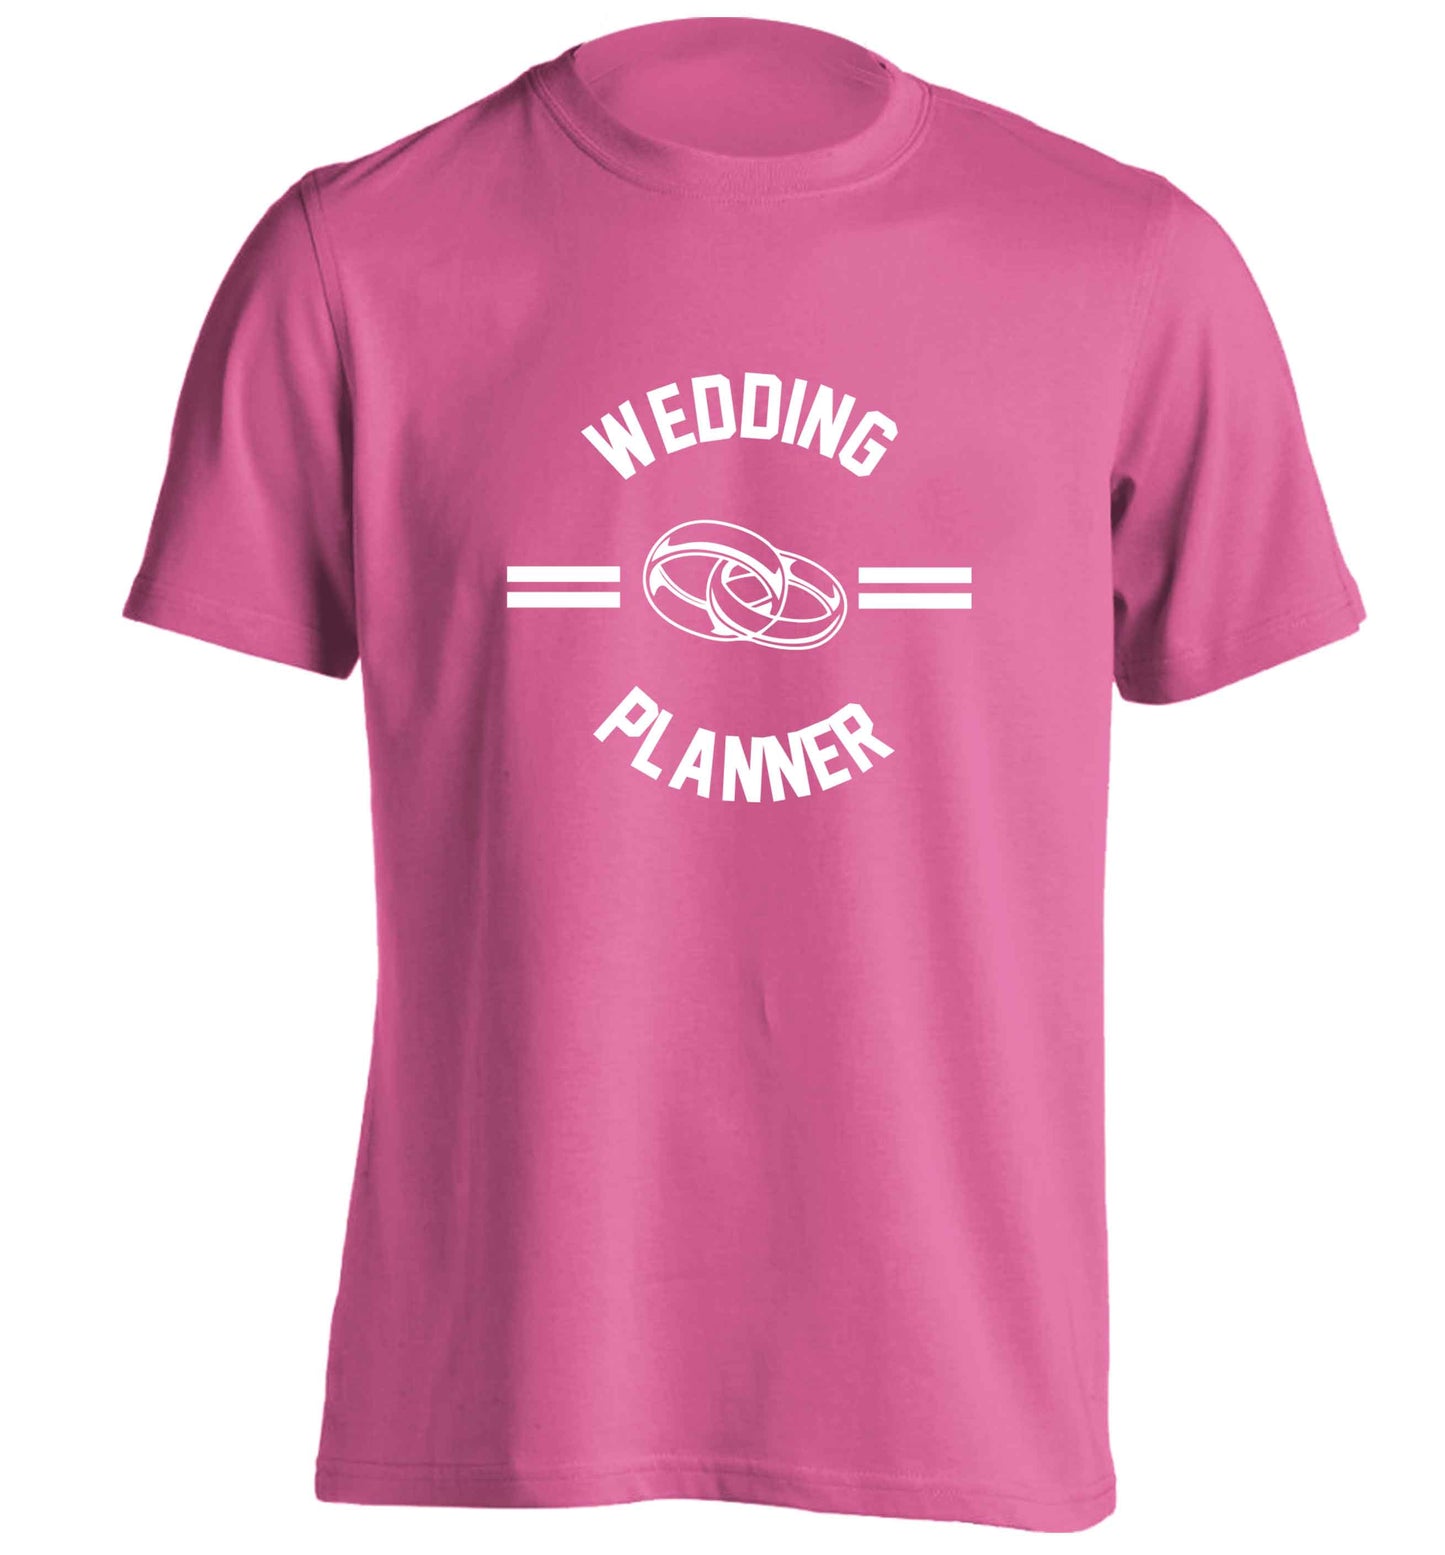 Wedding planner adults unisex pink Tshirt 2XL